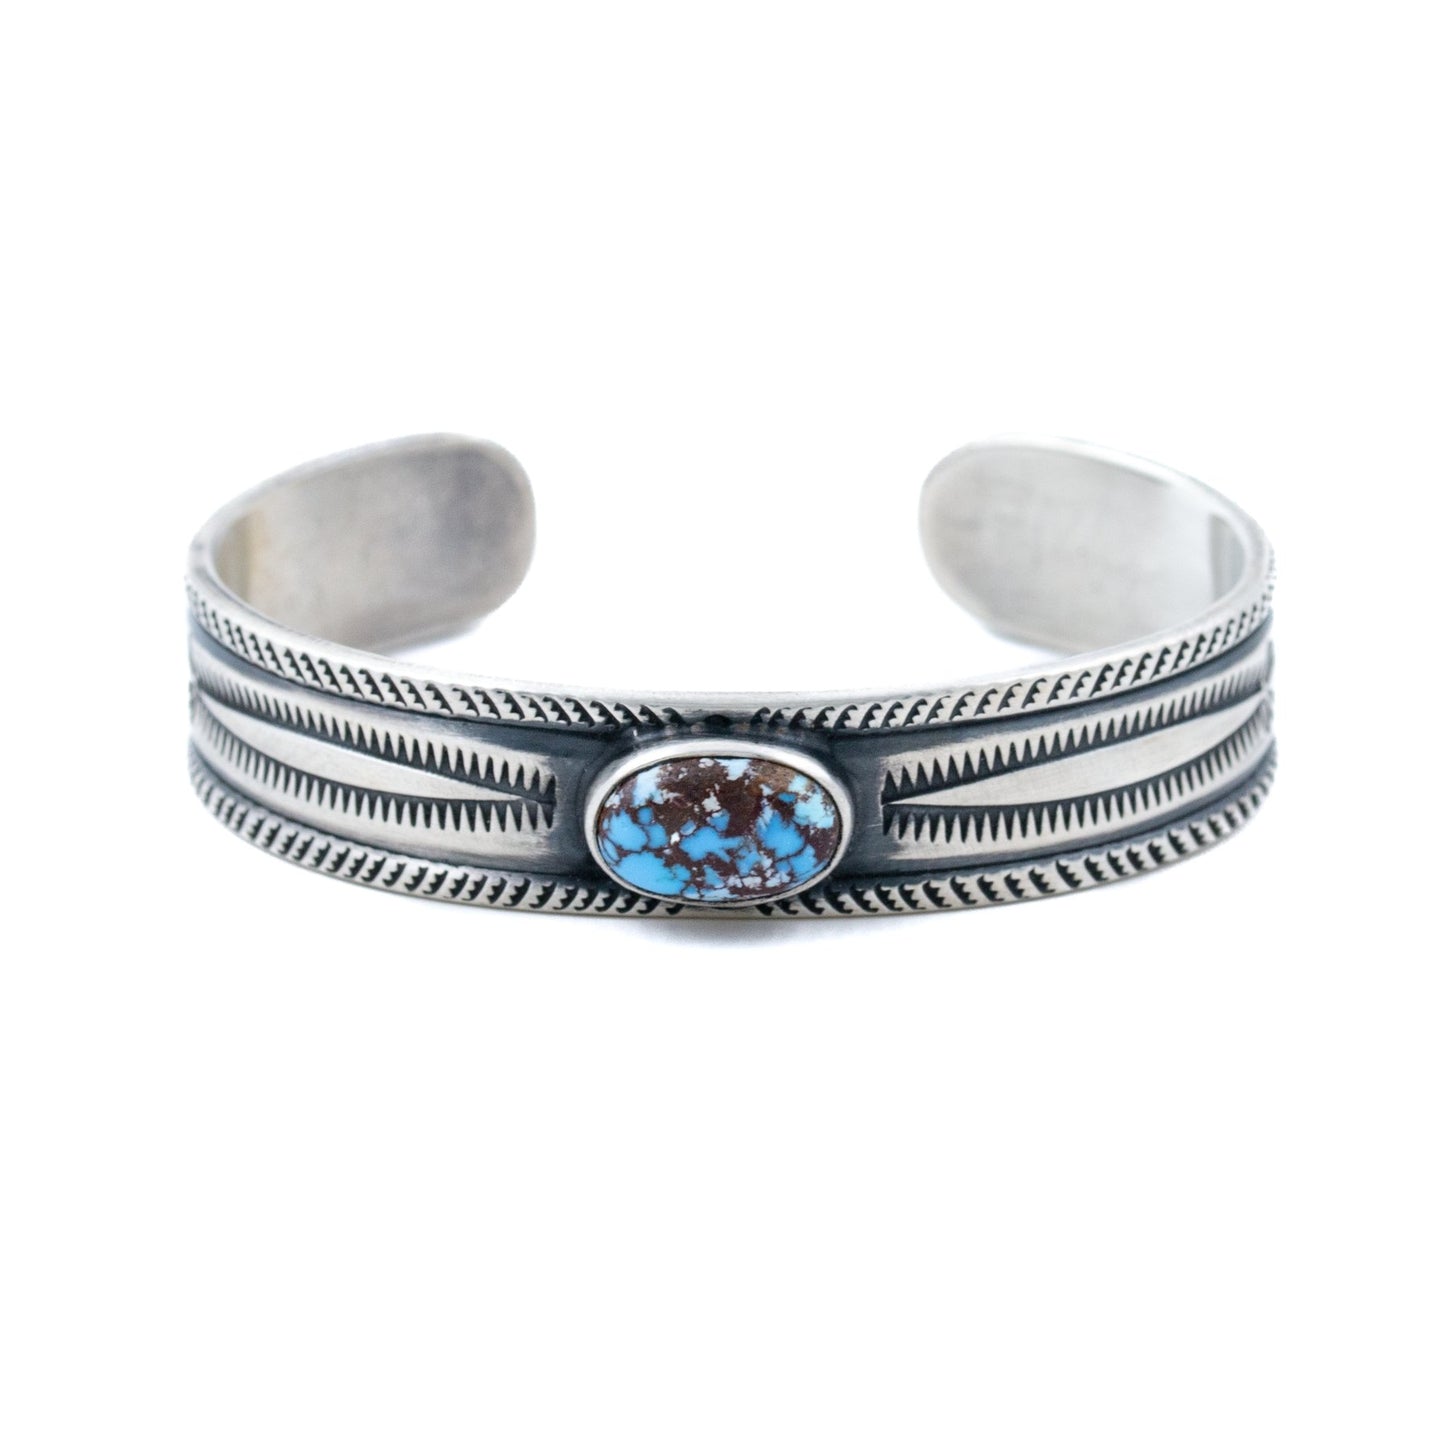 Alex Horst Golden Hills Turquoise Cuff - Kingdom Jewelry